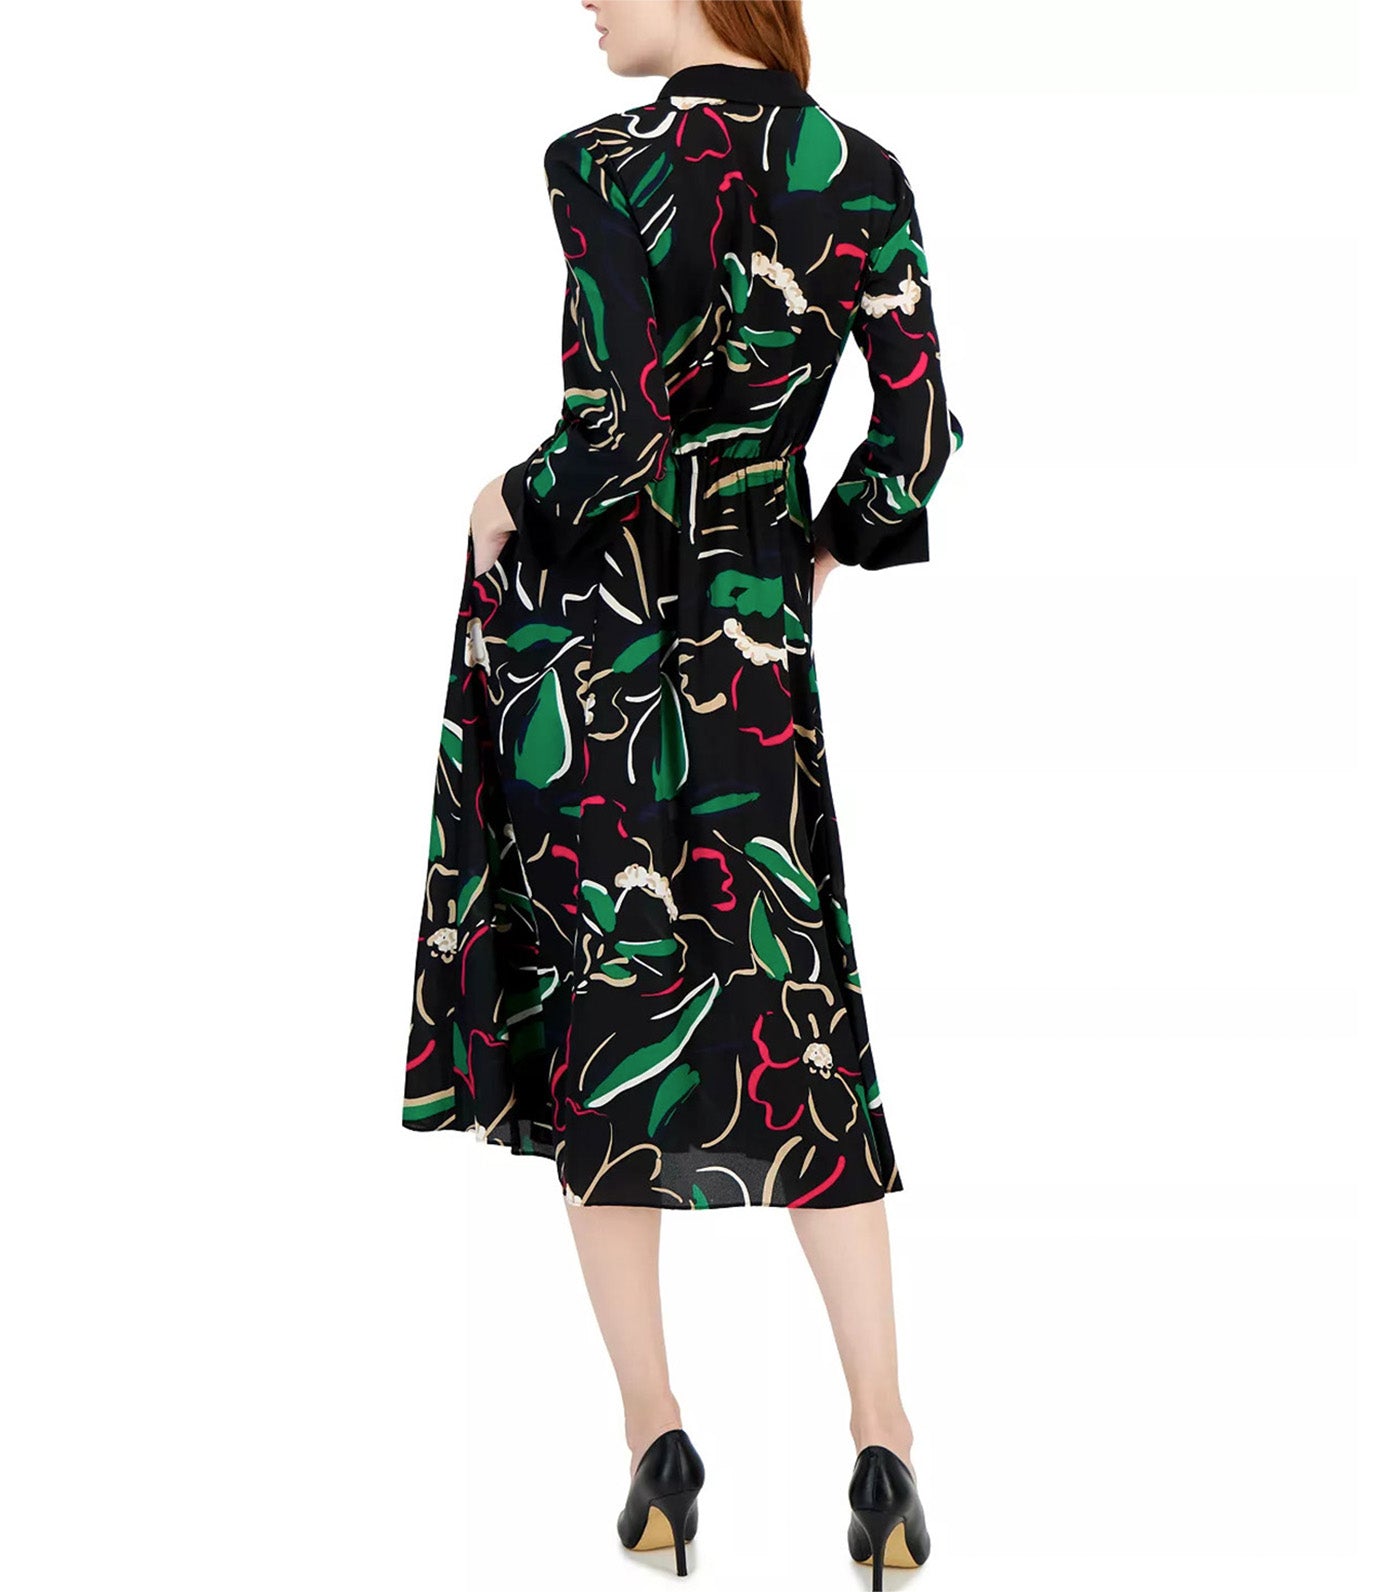 Women's Printed Drawstring-Waist Shirt Dress Anne Black/Emerald Mint Multi